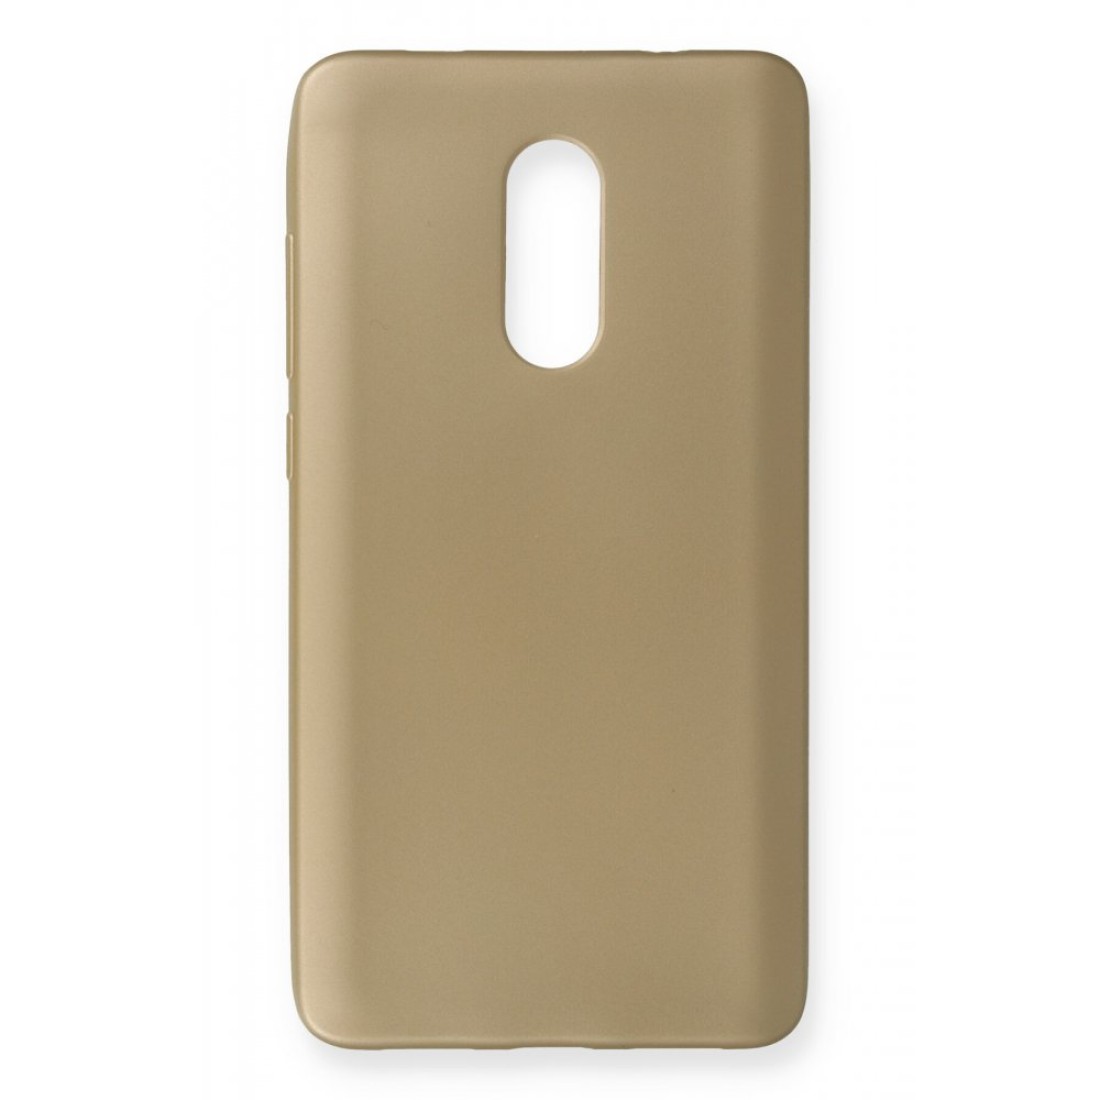 Xiaomi Redmi Note 4X Kılıf Premium Rubber Silikon - Gold